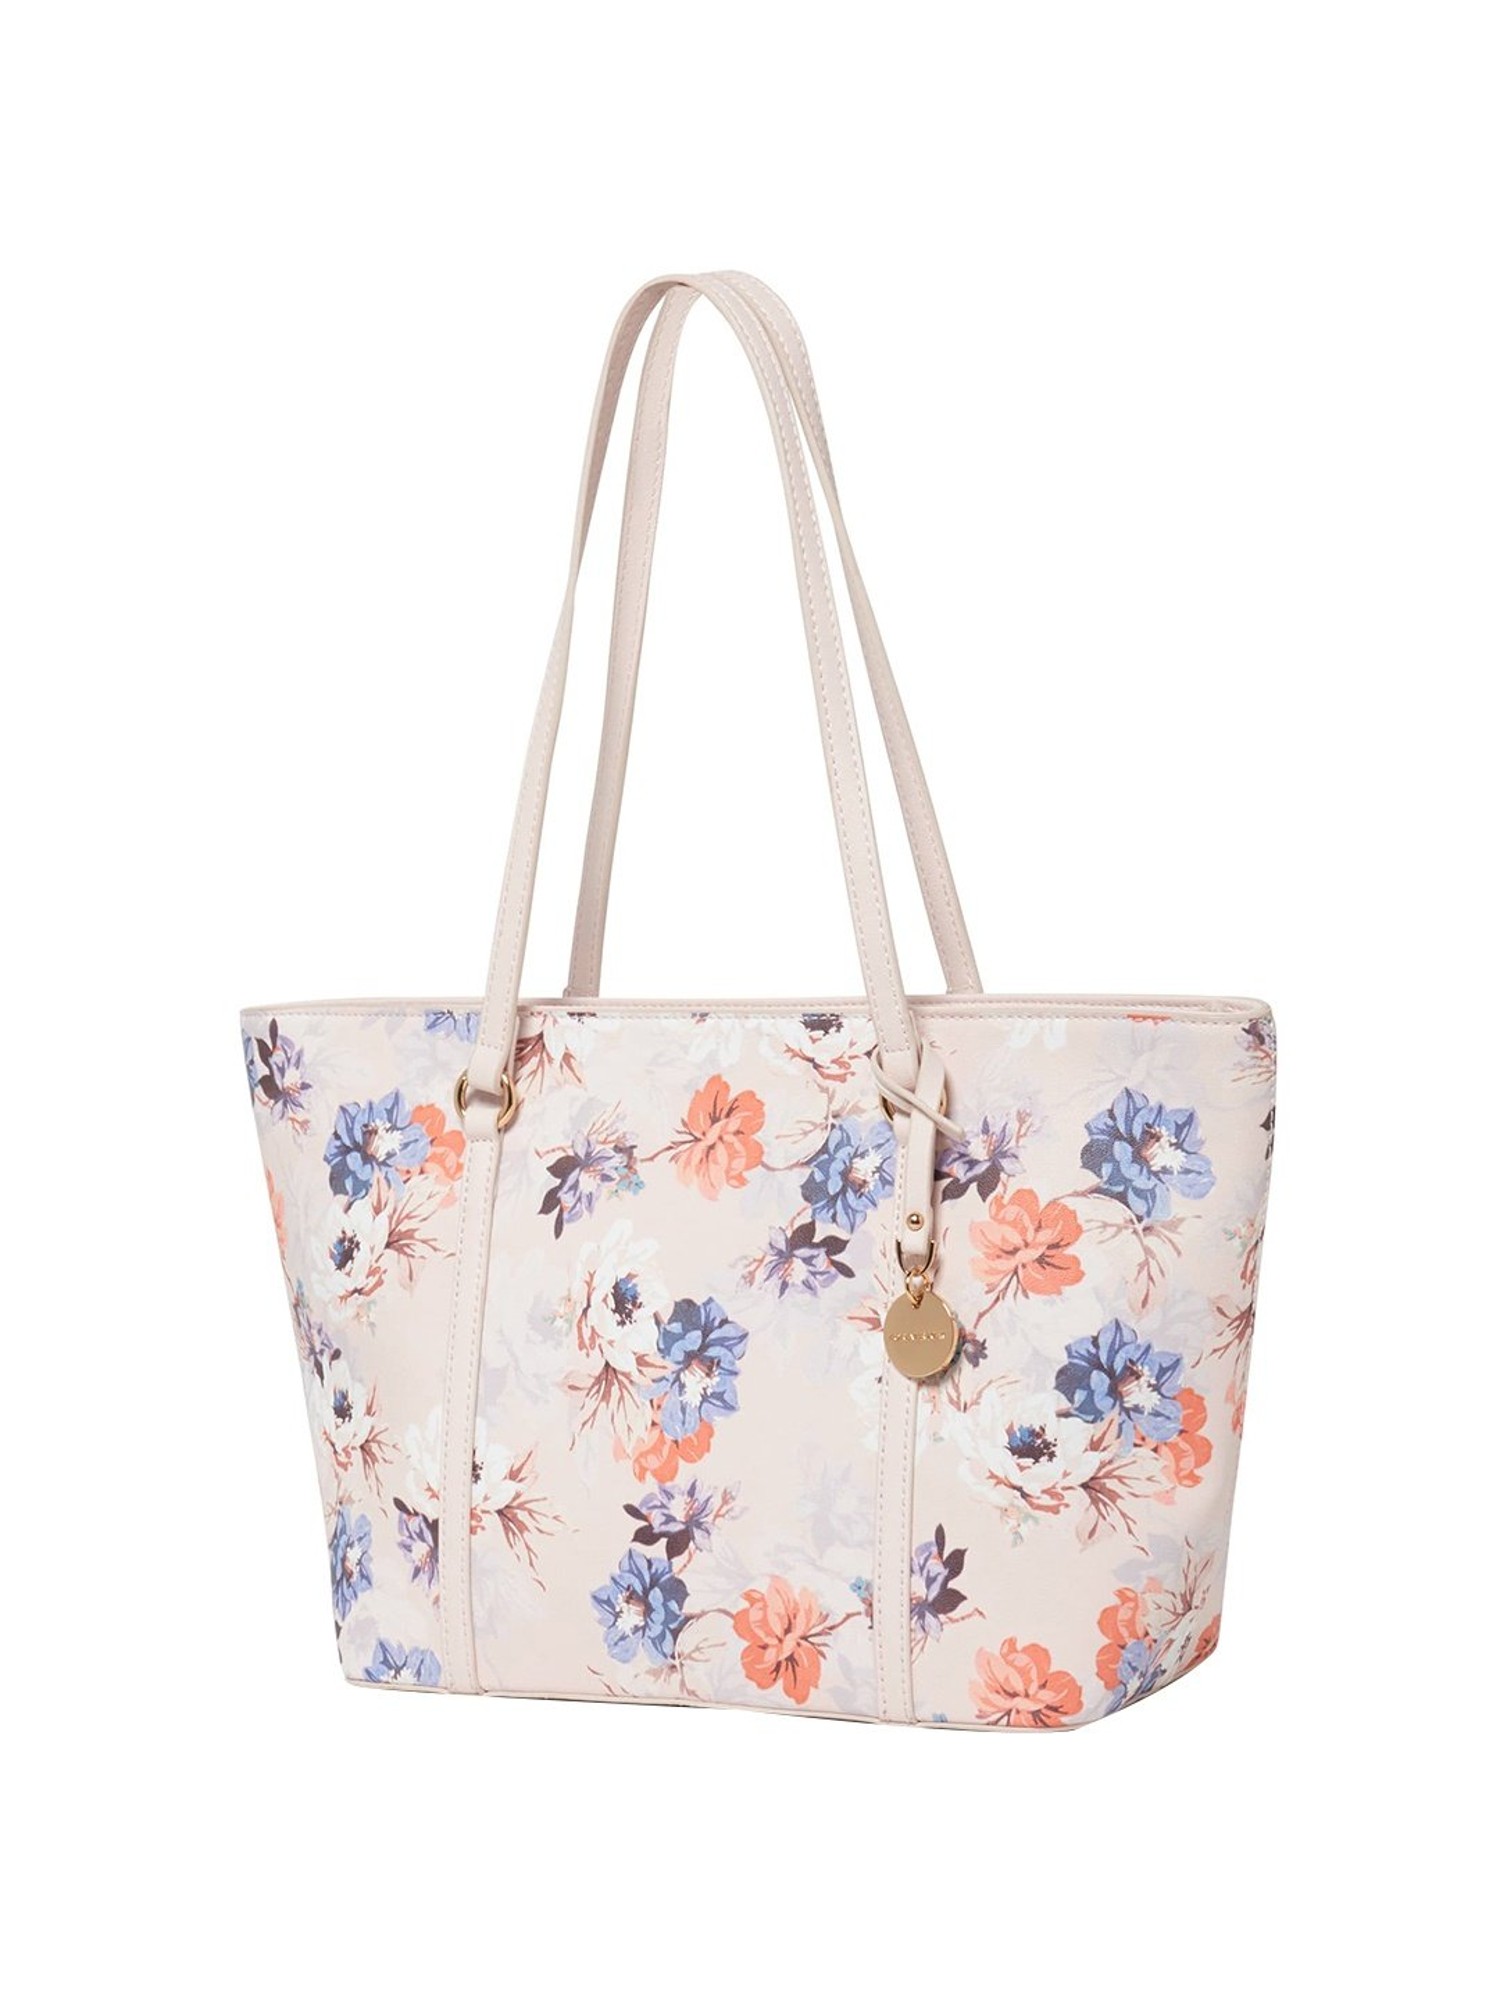 Buy Forever New White Printed Medium Tote Handbag For Women At Best Price   Tata CLiQ